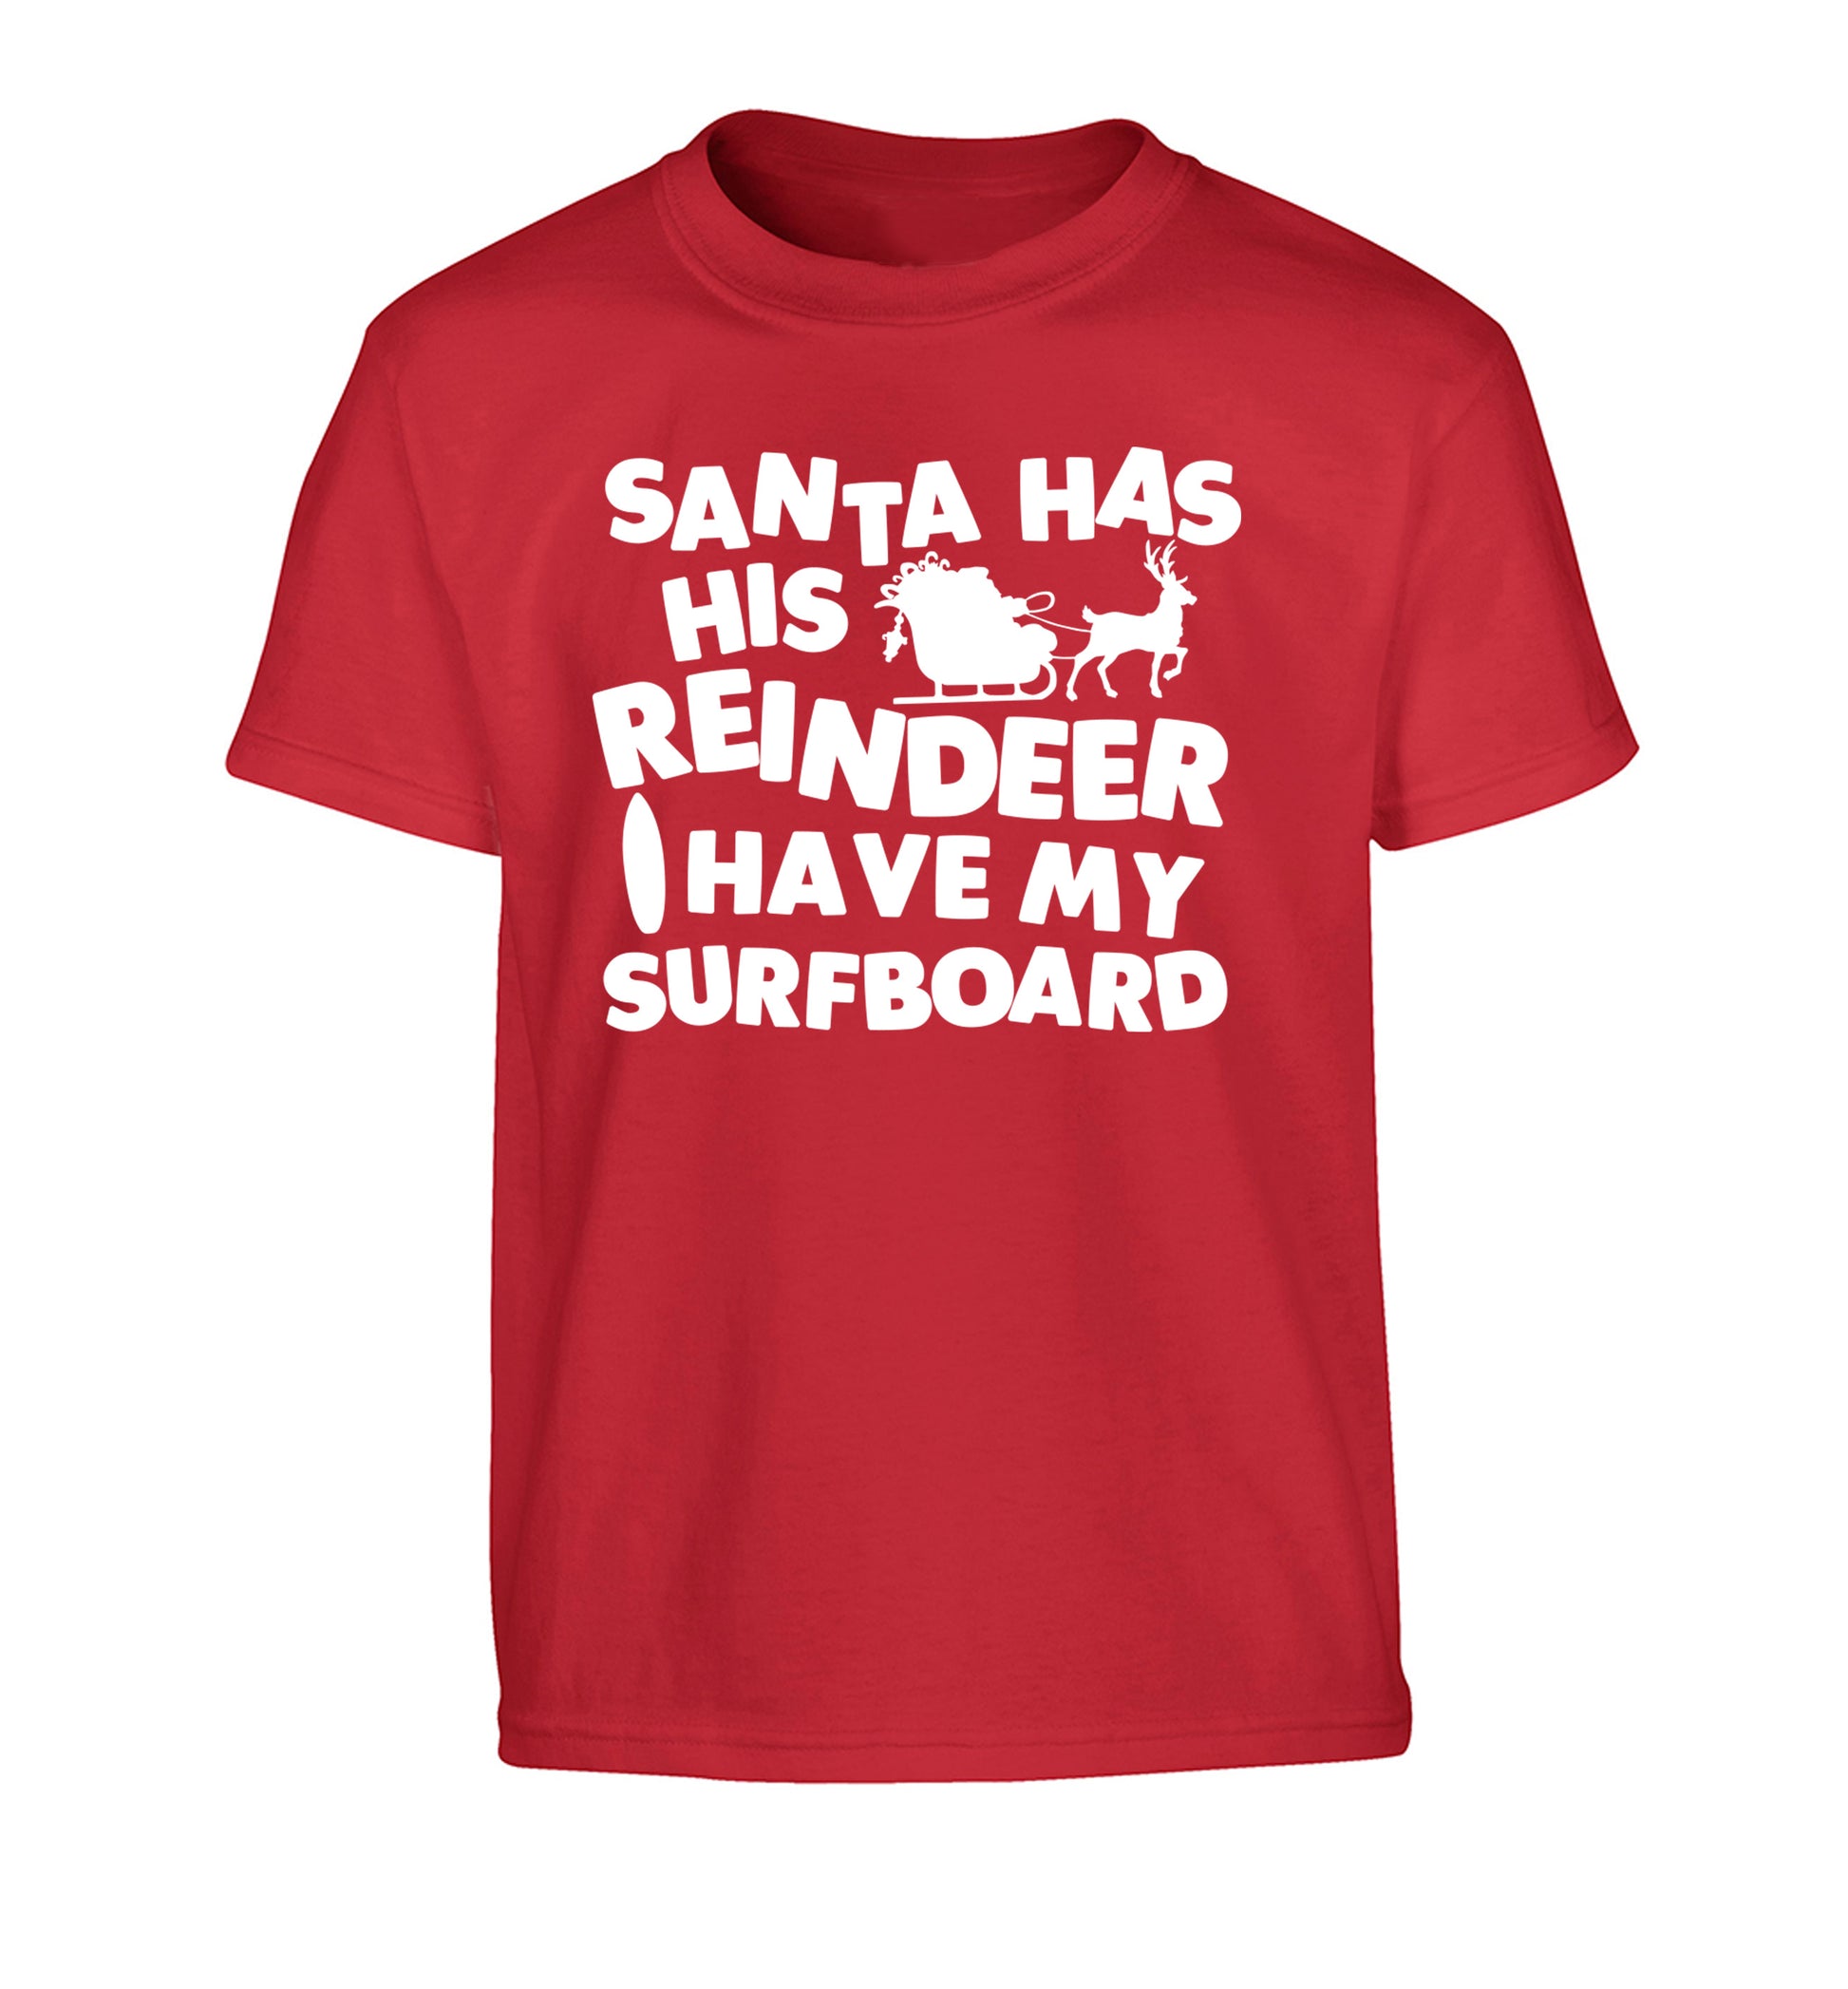 Santa has his reindeer I have my surfboard Children's red Tshirt 12-14 Years